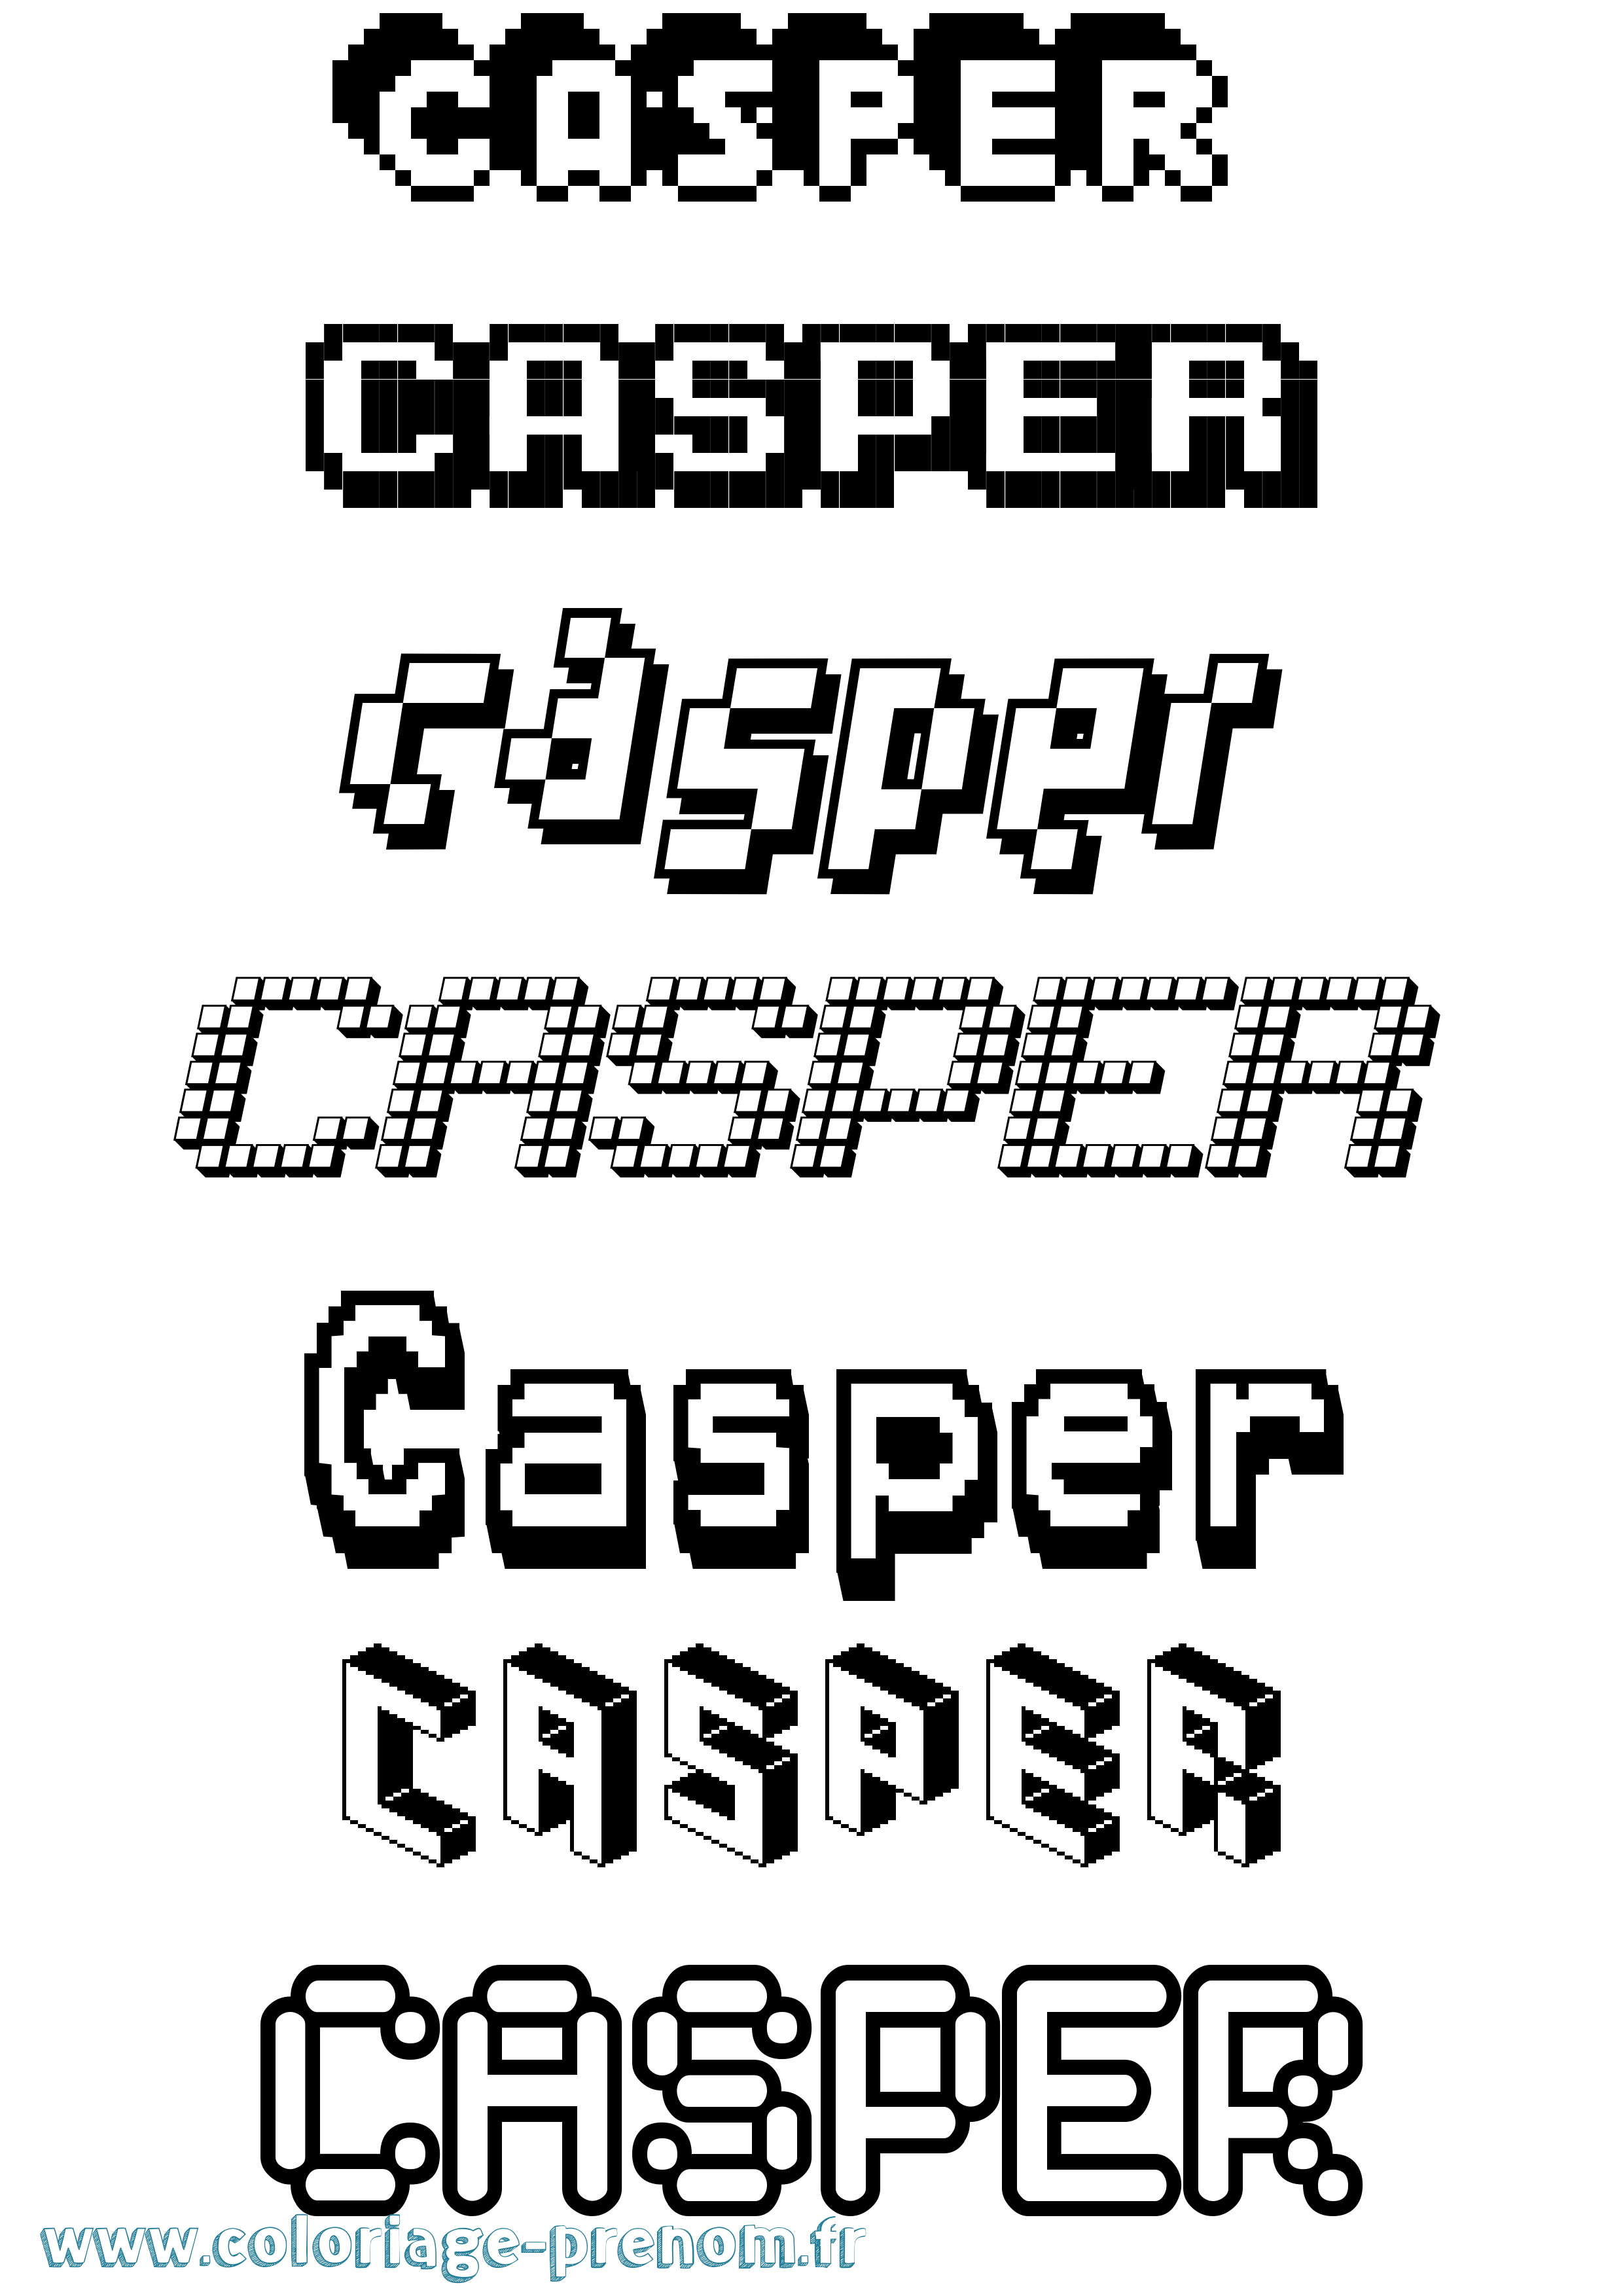 Coloriage prénom Casper Pixel